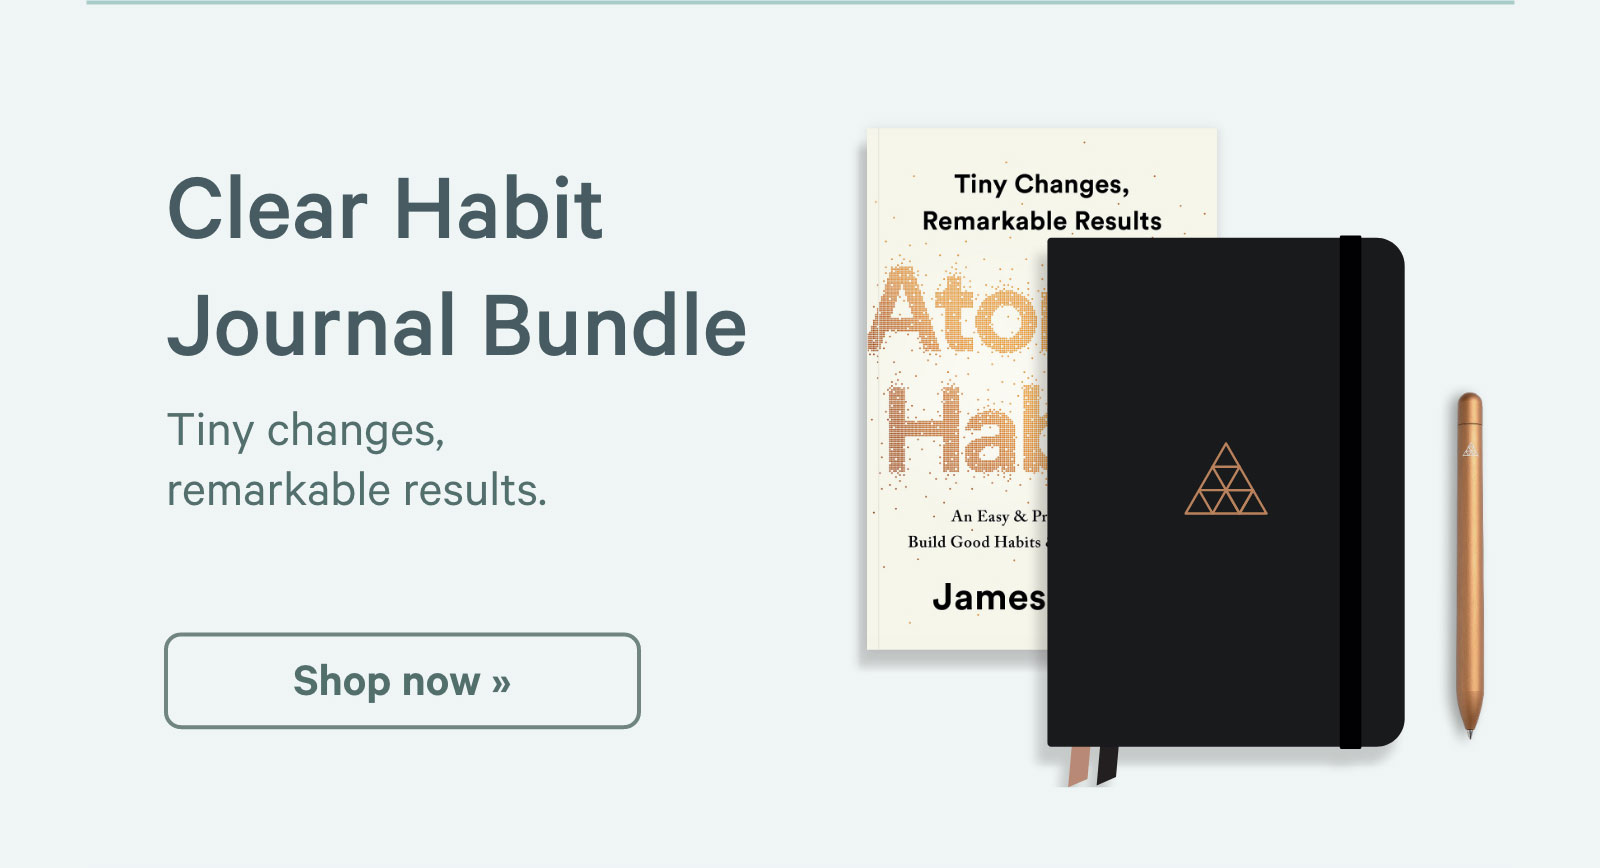 Clear Habit Journal Bundle. Tiny changes, remarkable results. Shop now ?